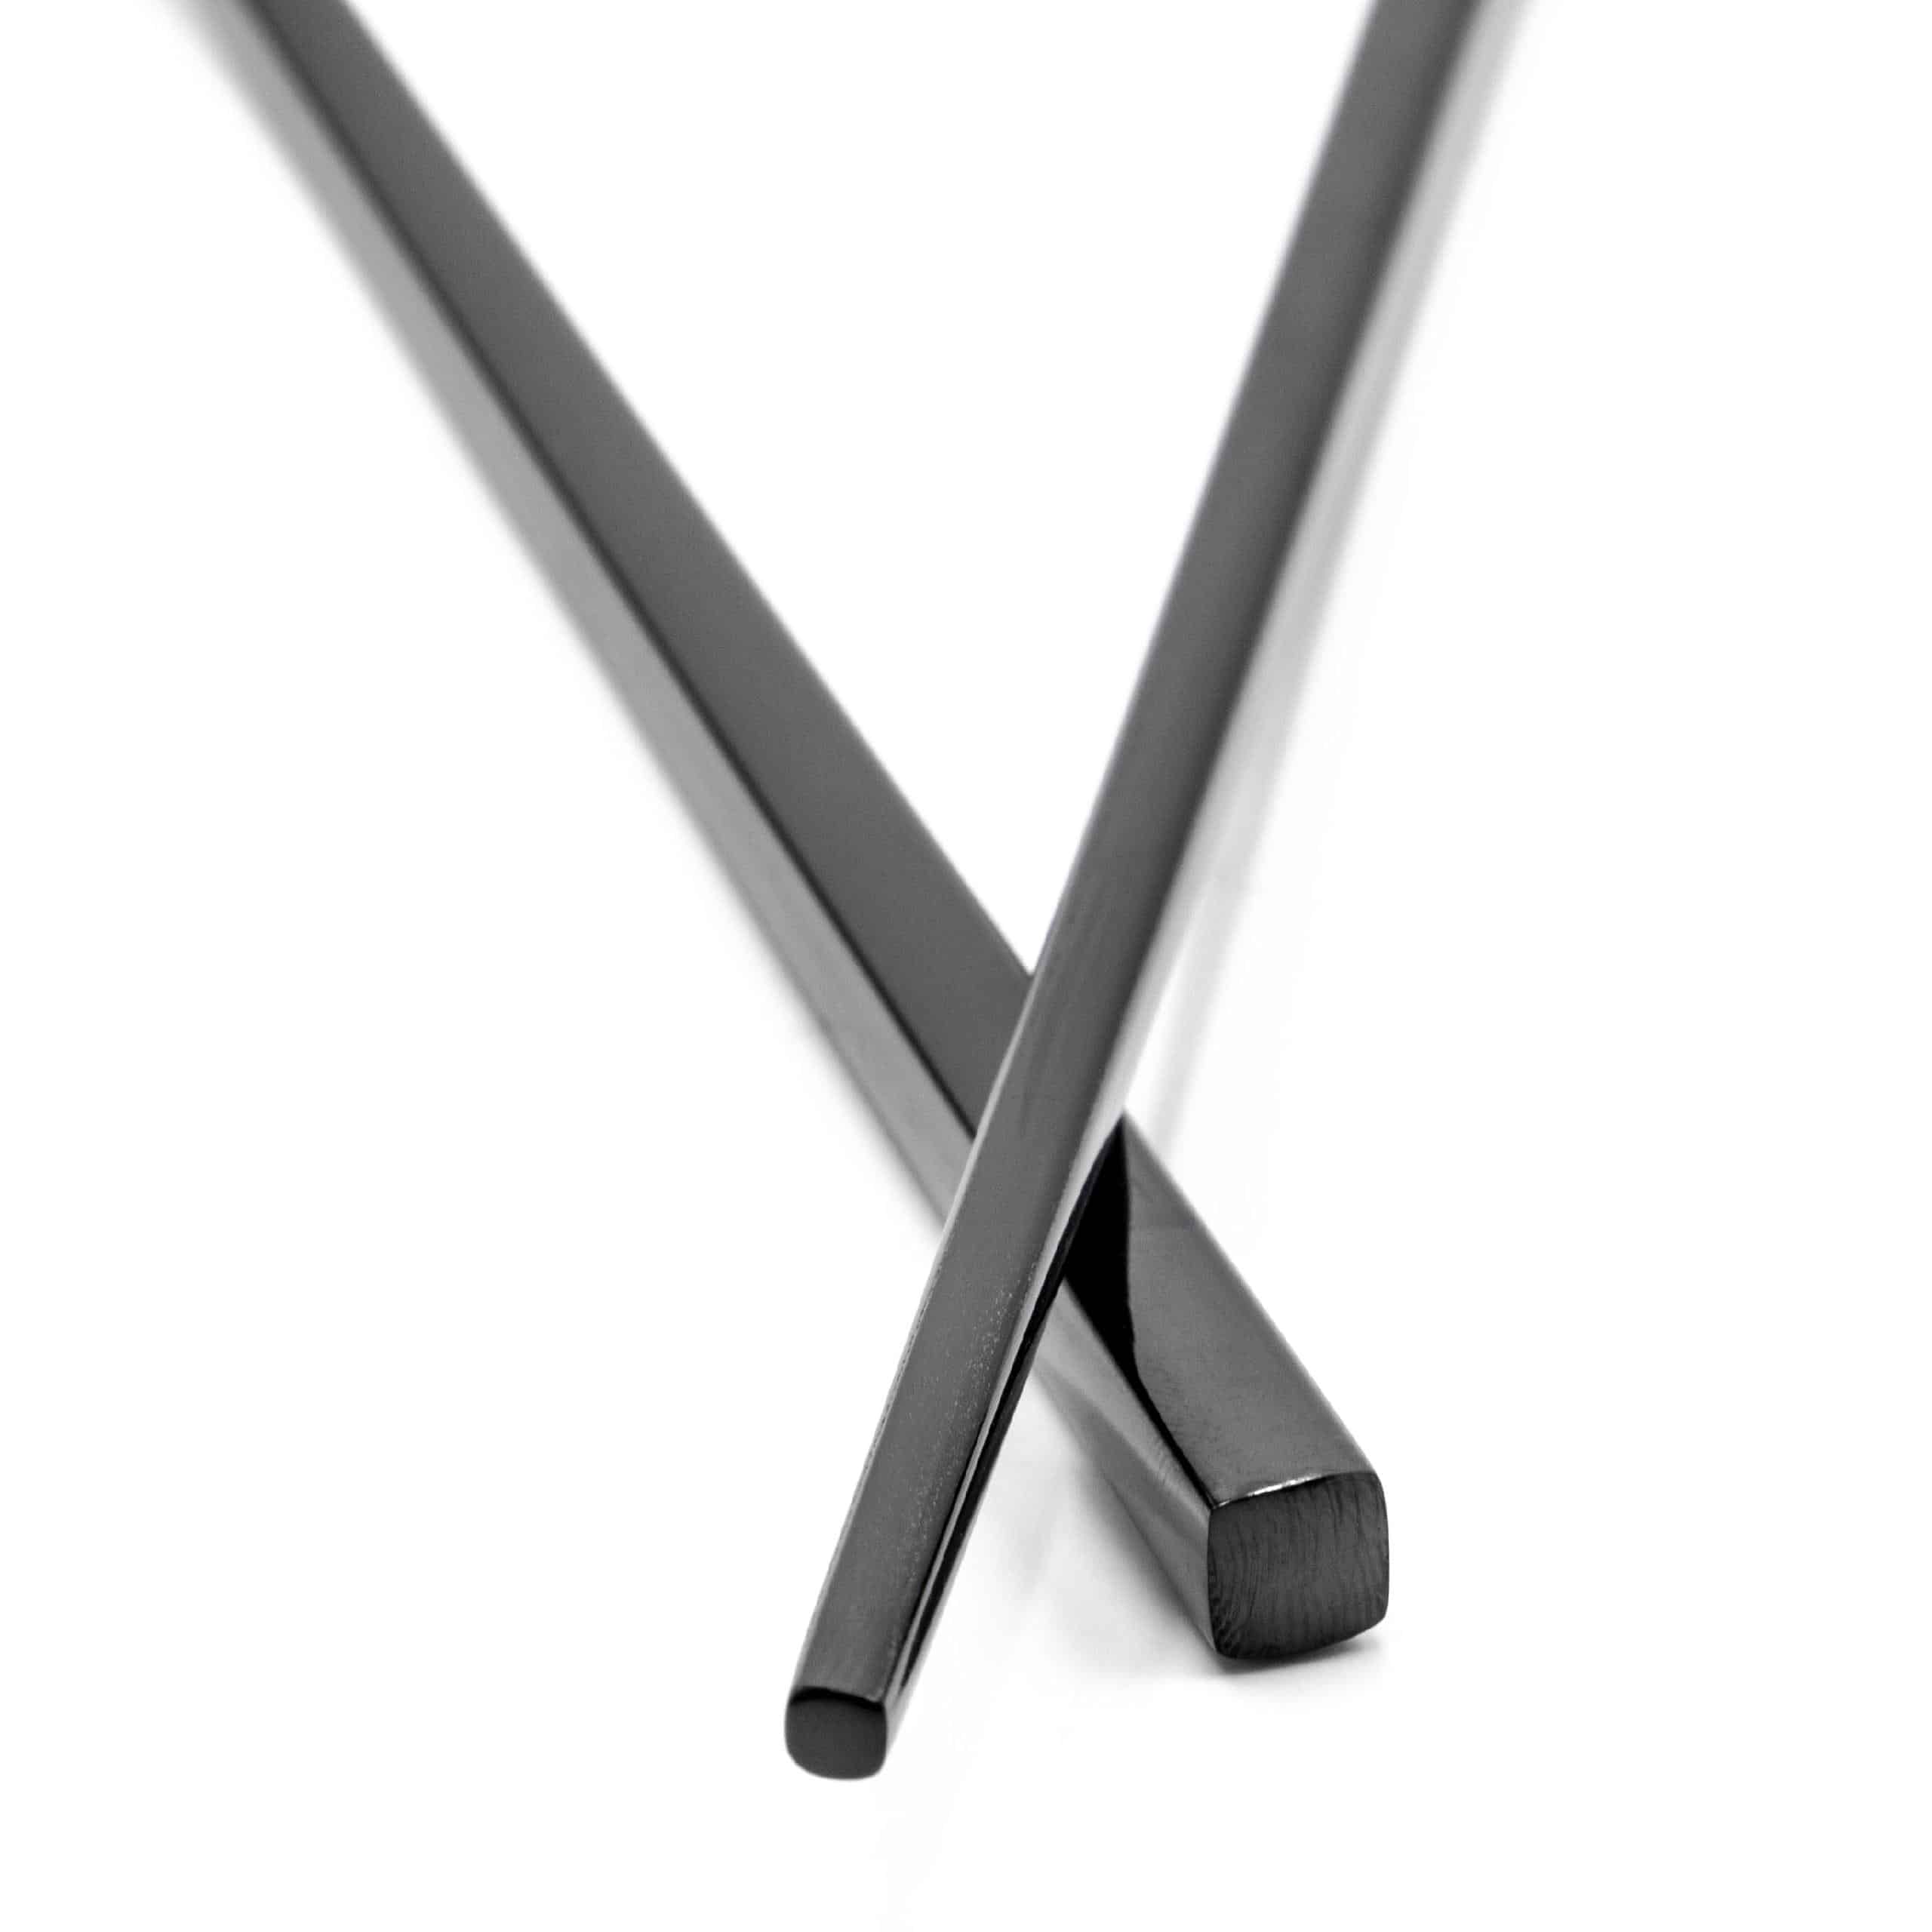 Chopstick Set (1 Pair) - Stainless Steel, black, 23 cm long, Reusable